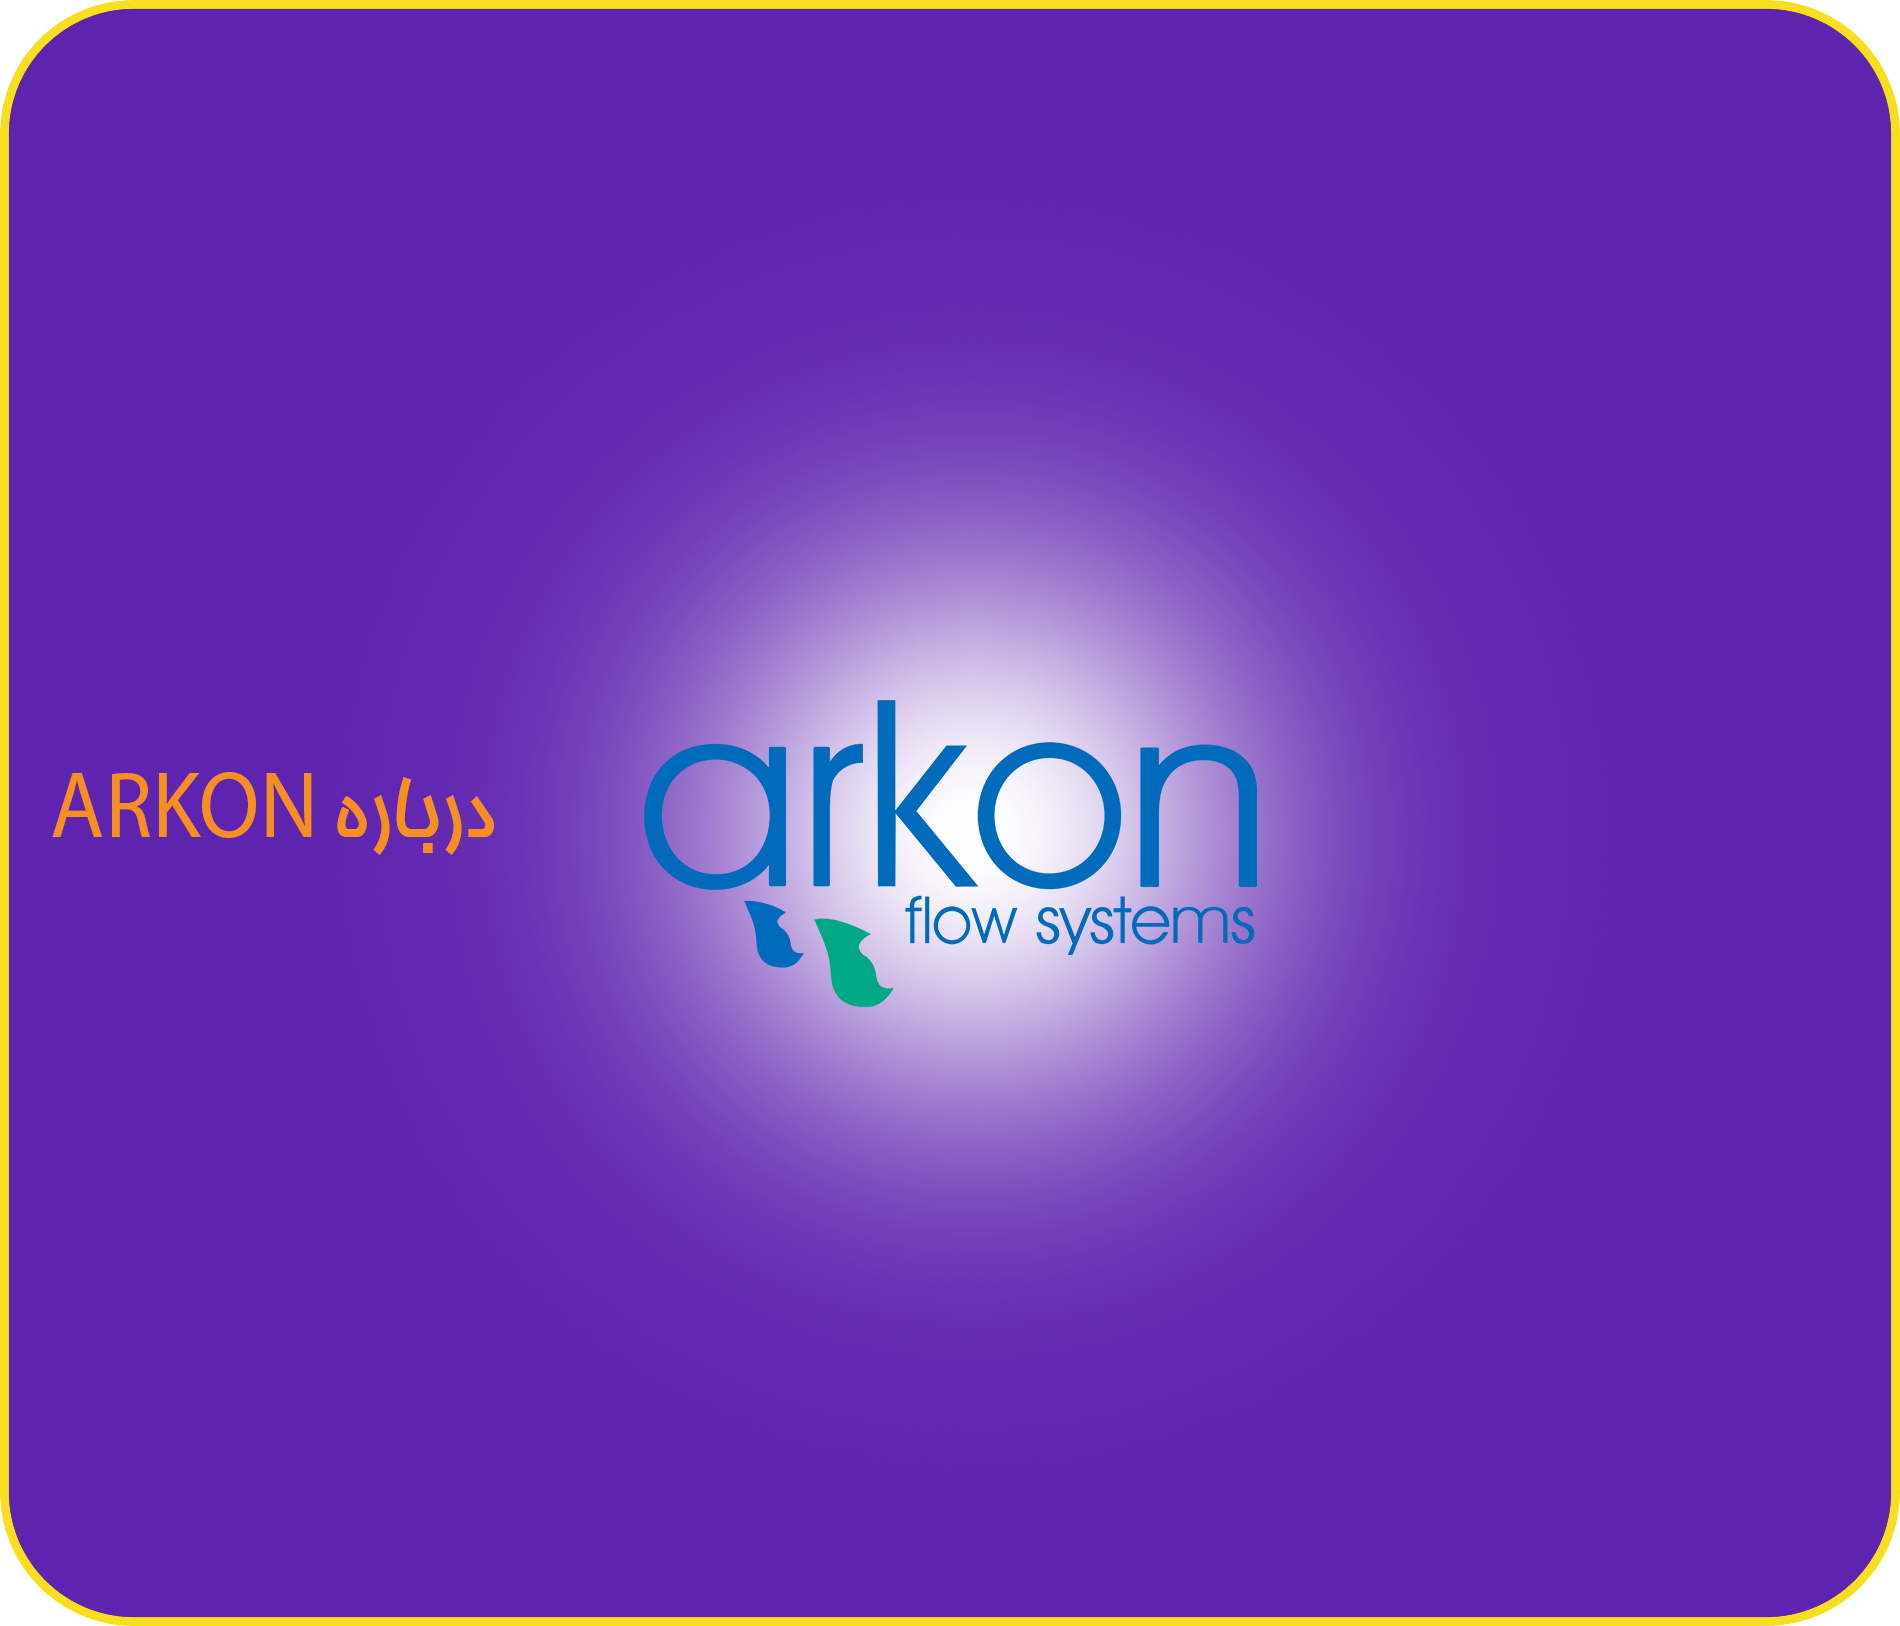 about Arkon